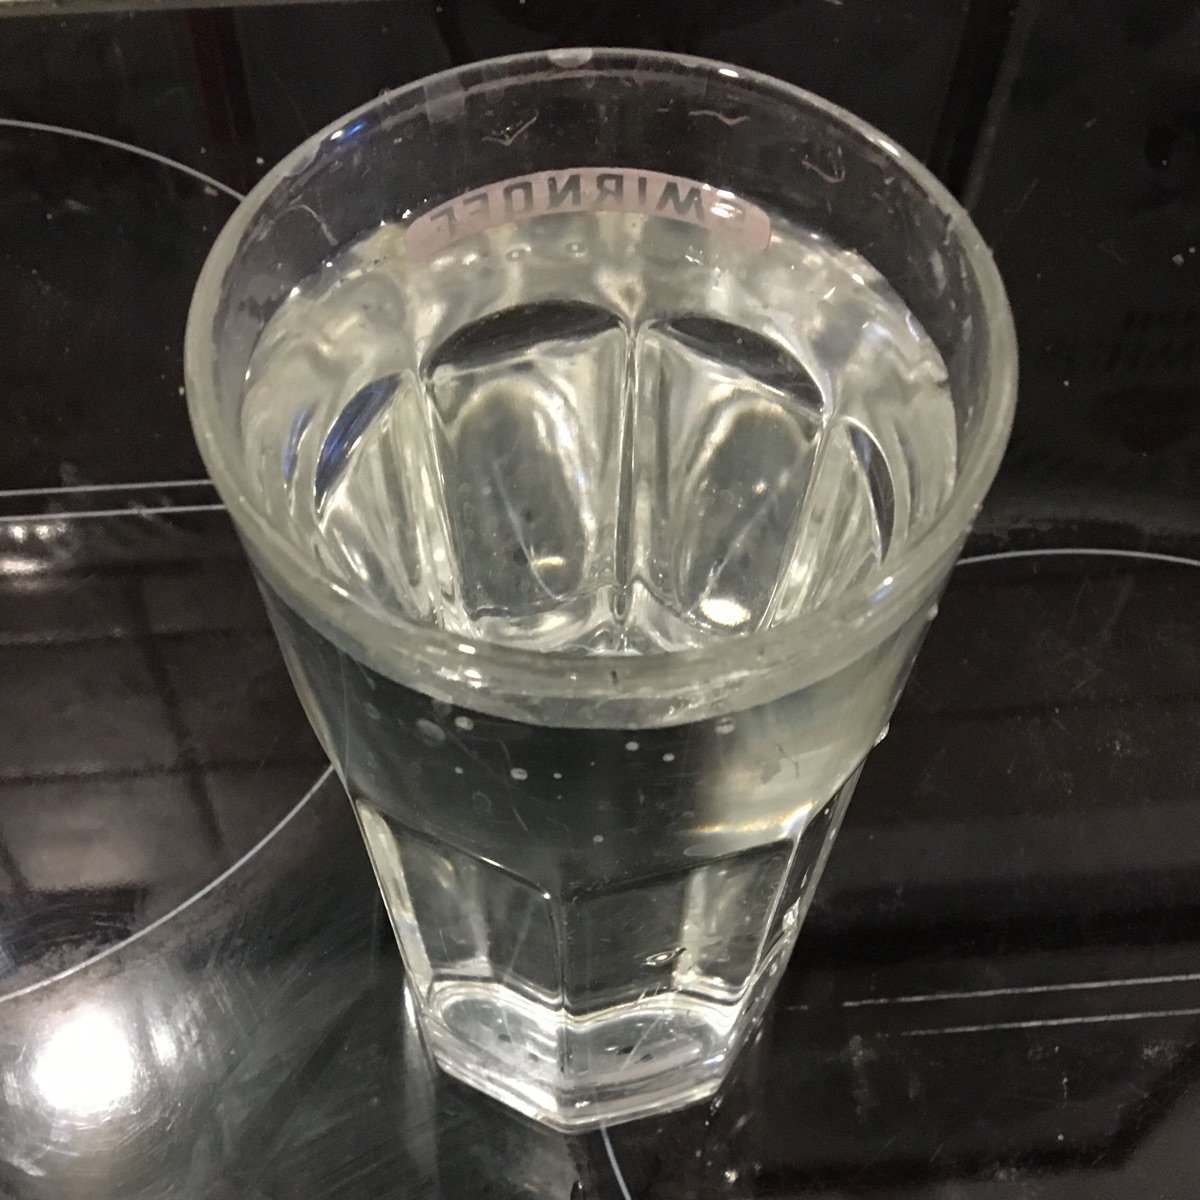 Kostilatas natural mineral water Reviews | abillion